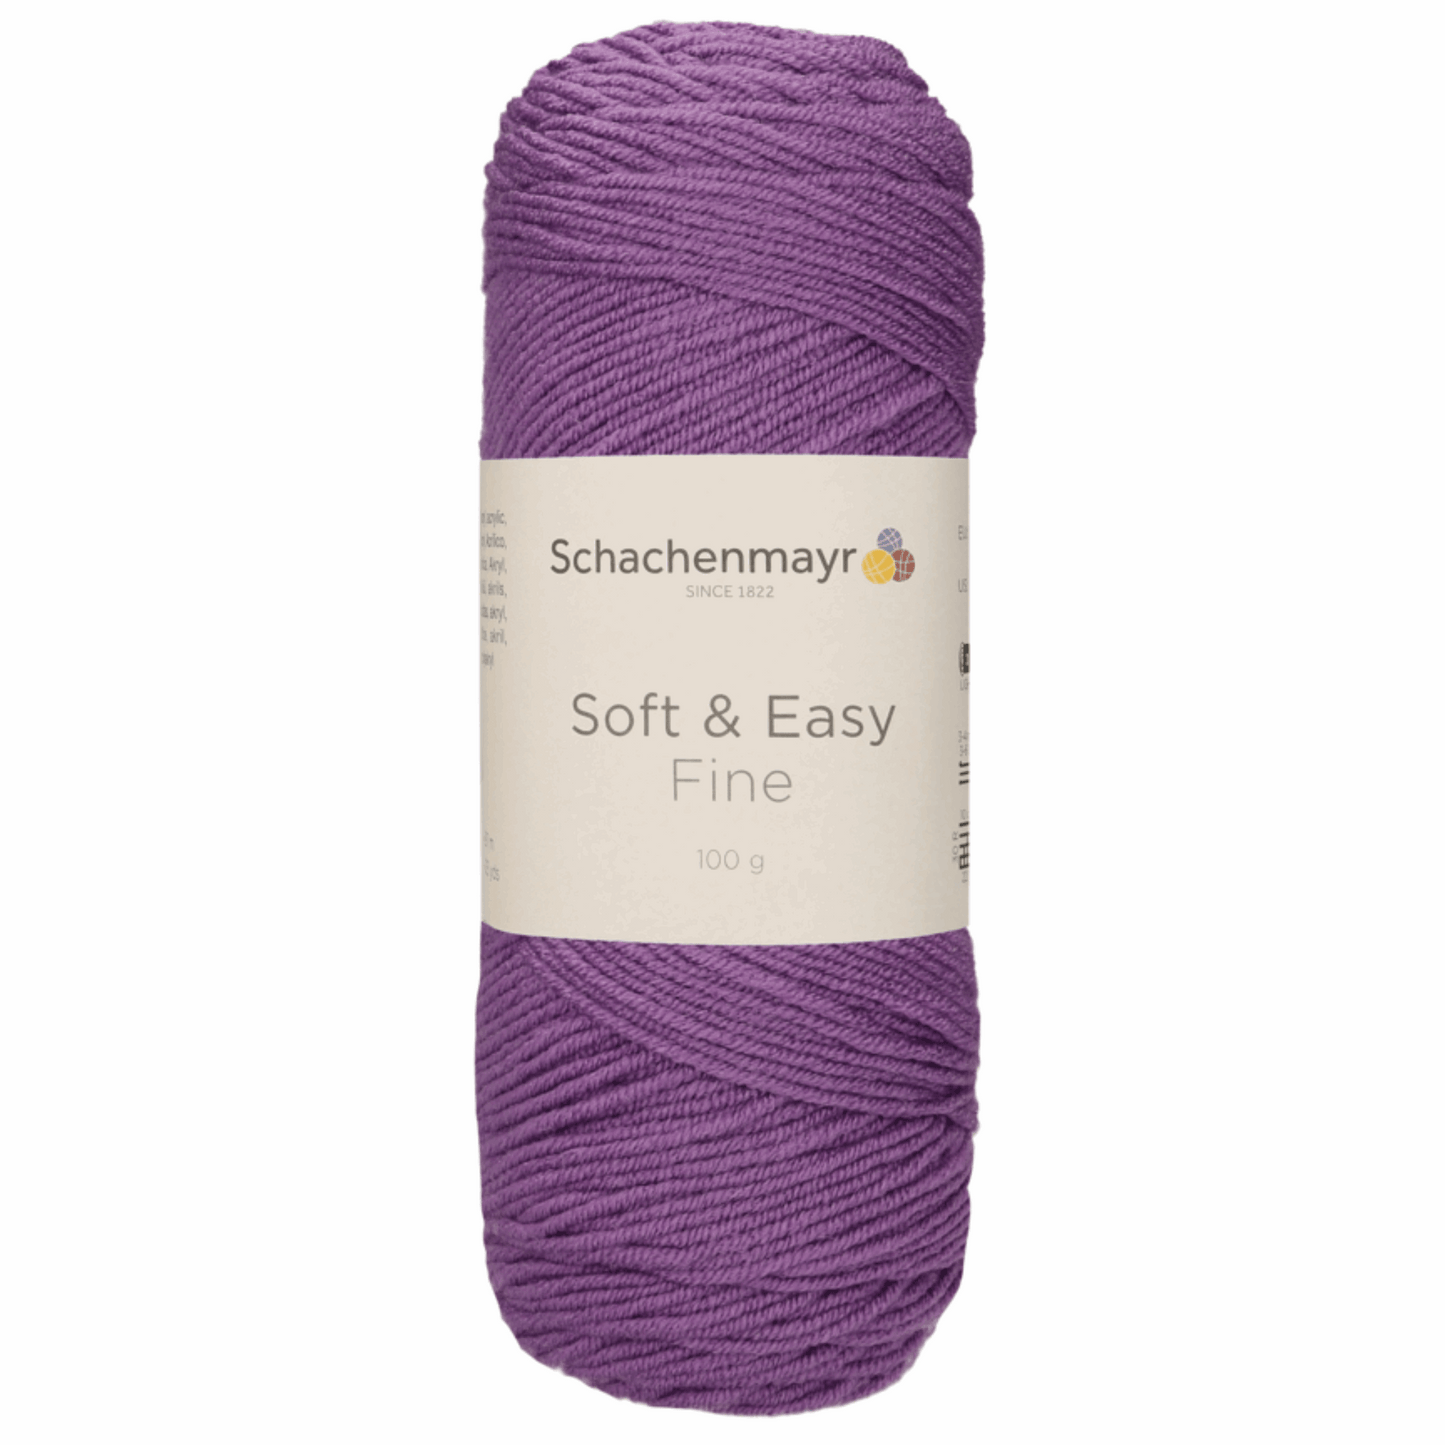 Schachenmayr Soft & Easy Fine 100g, 90402, Farbe Lila 49